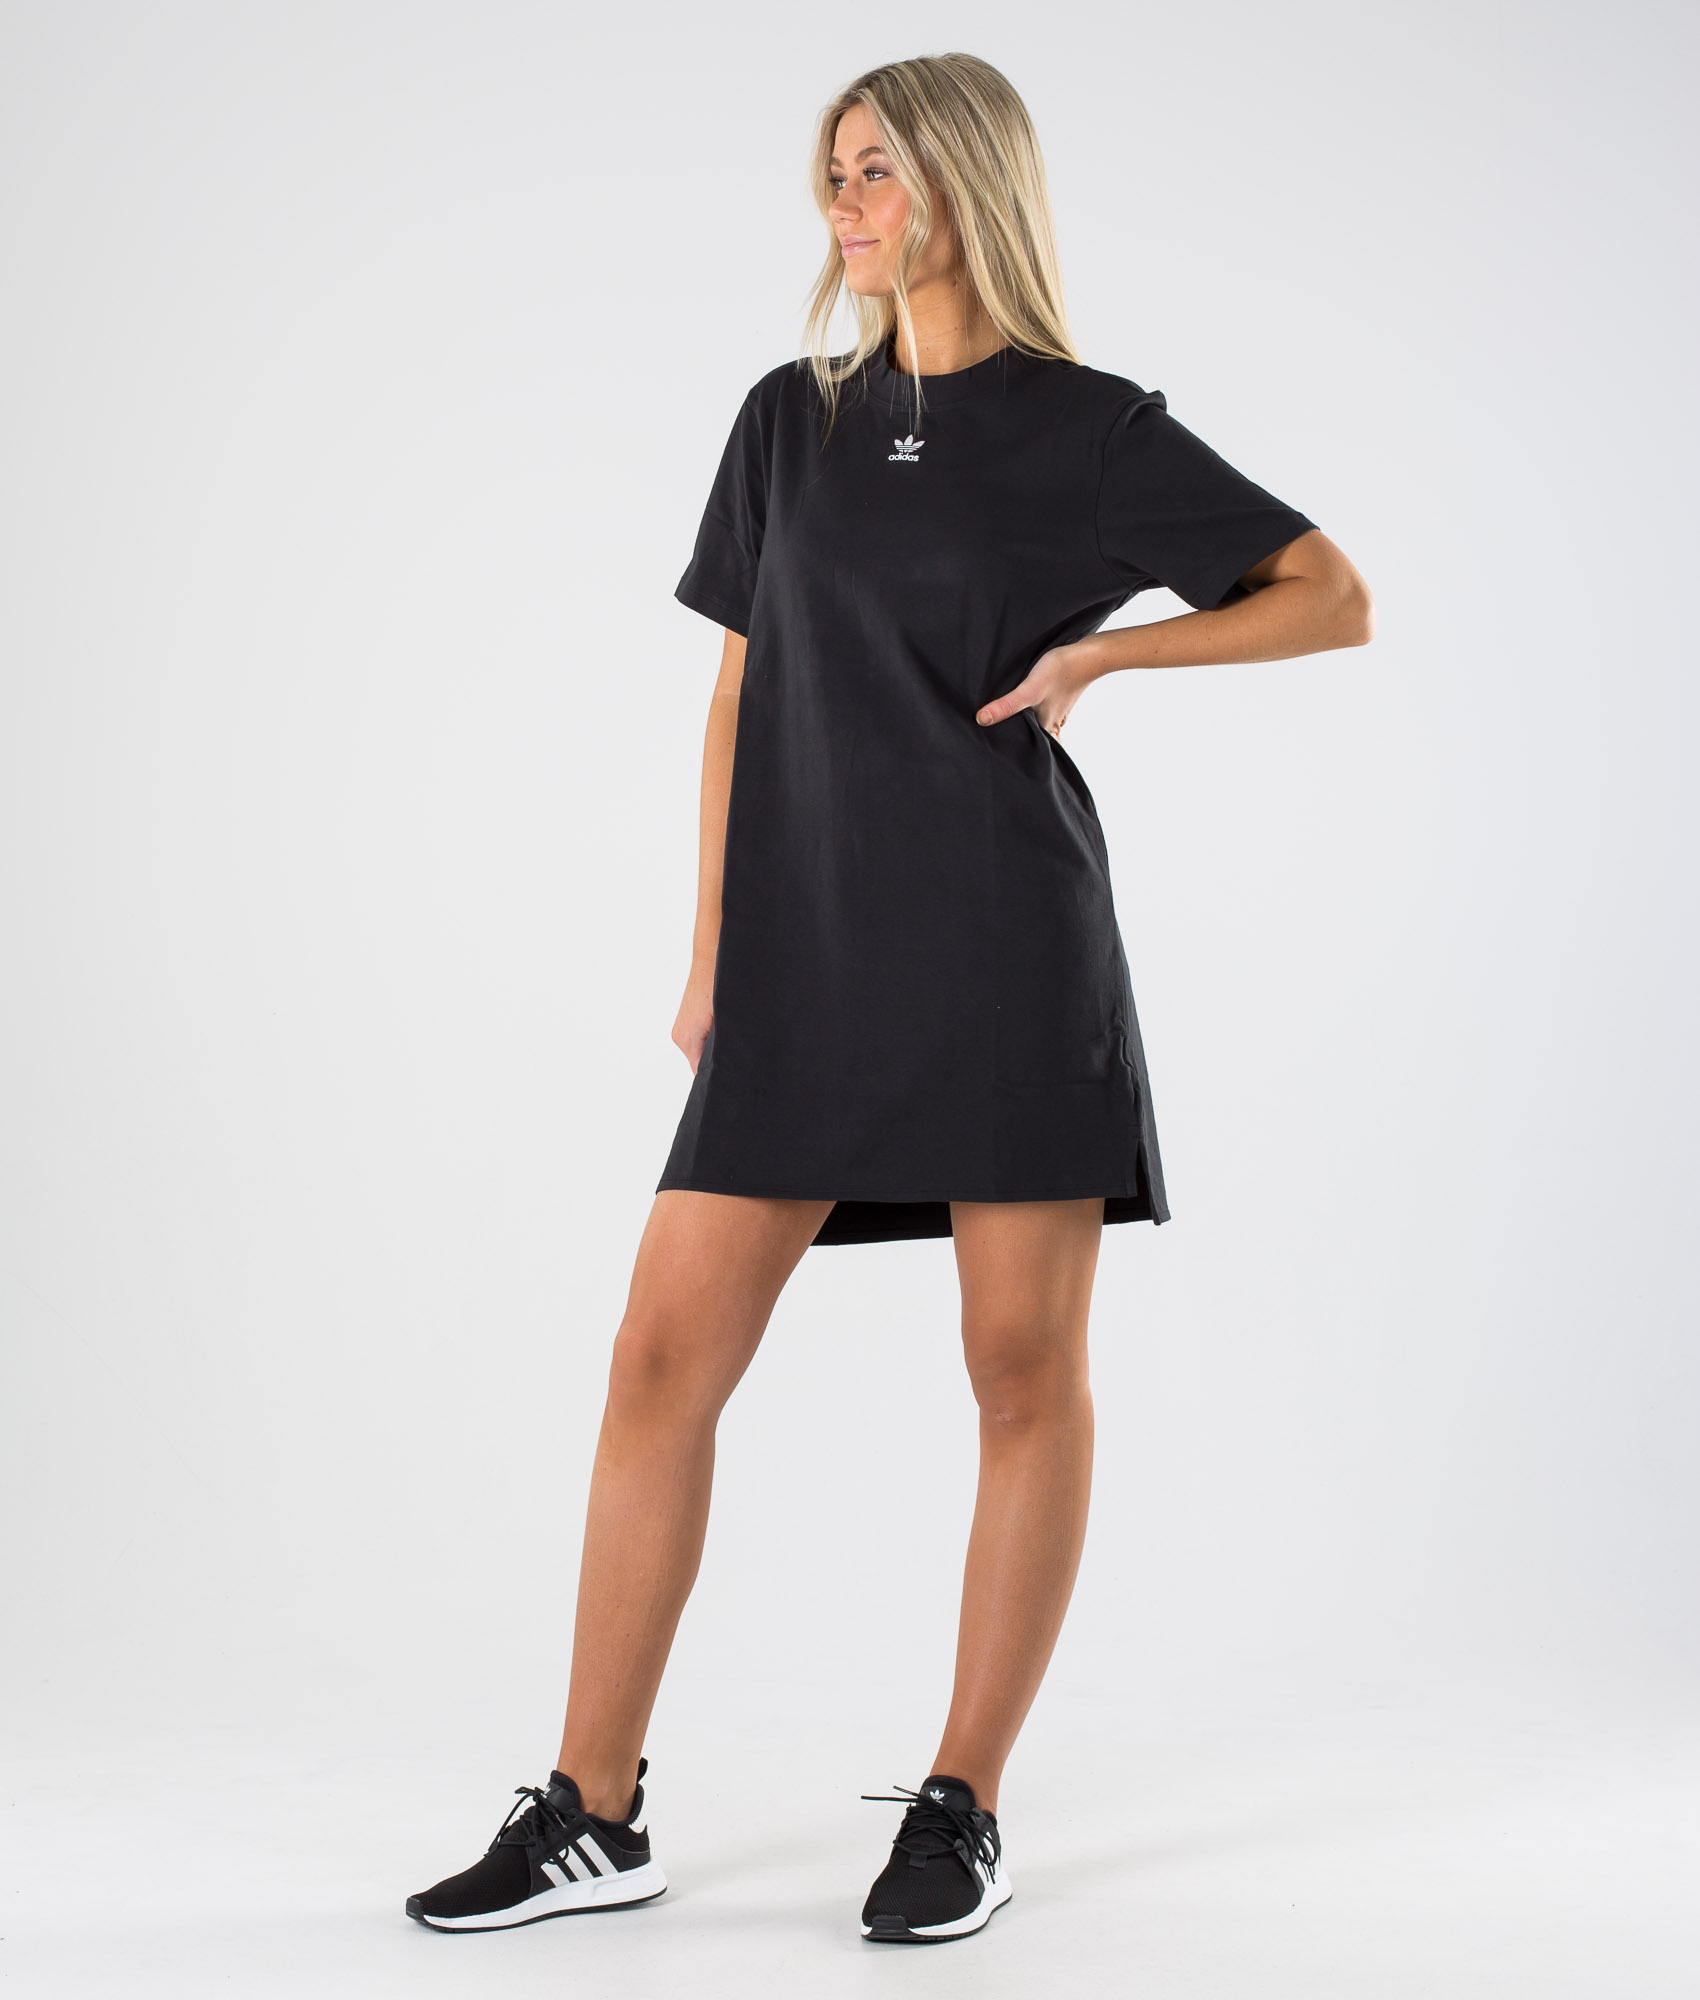 Adidas Originals Trefoil Dress Dress 